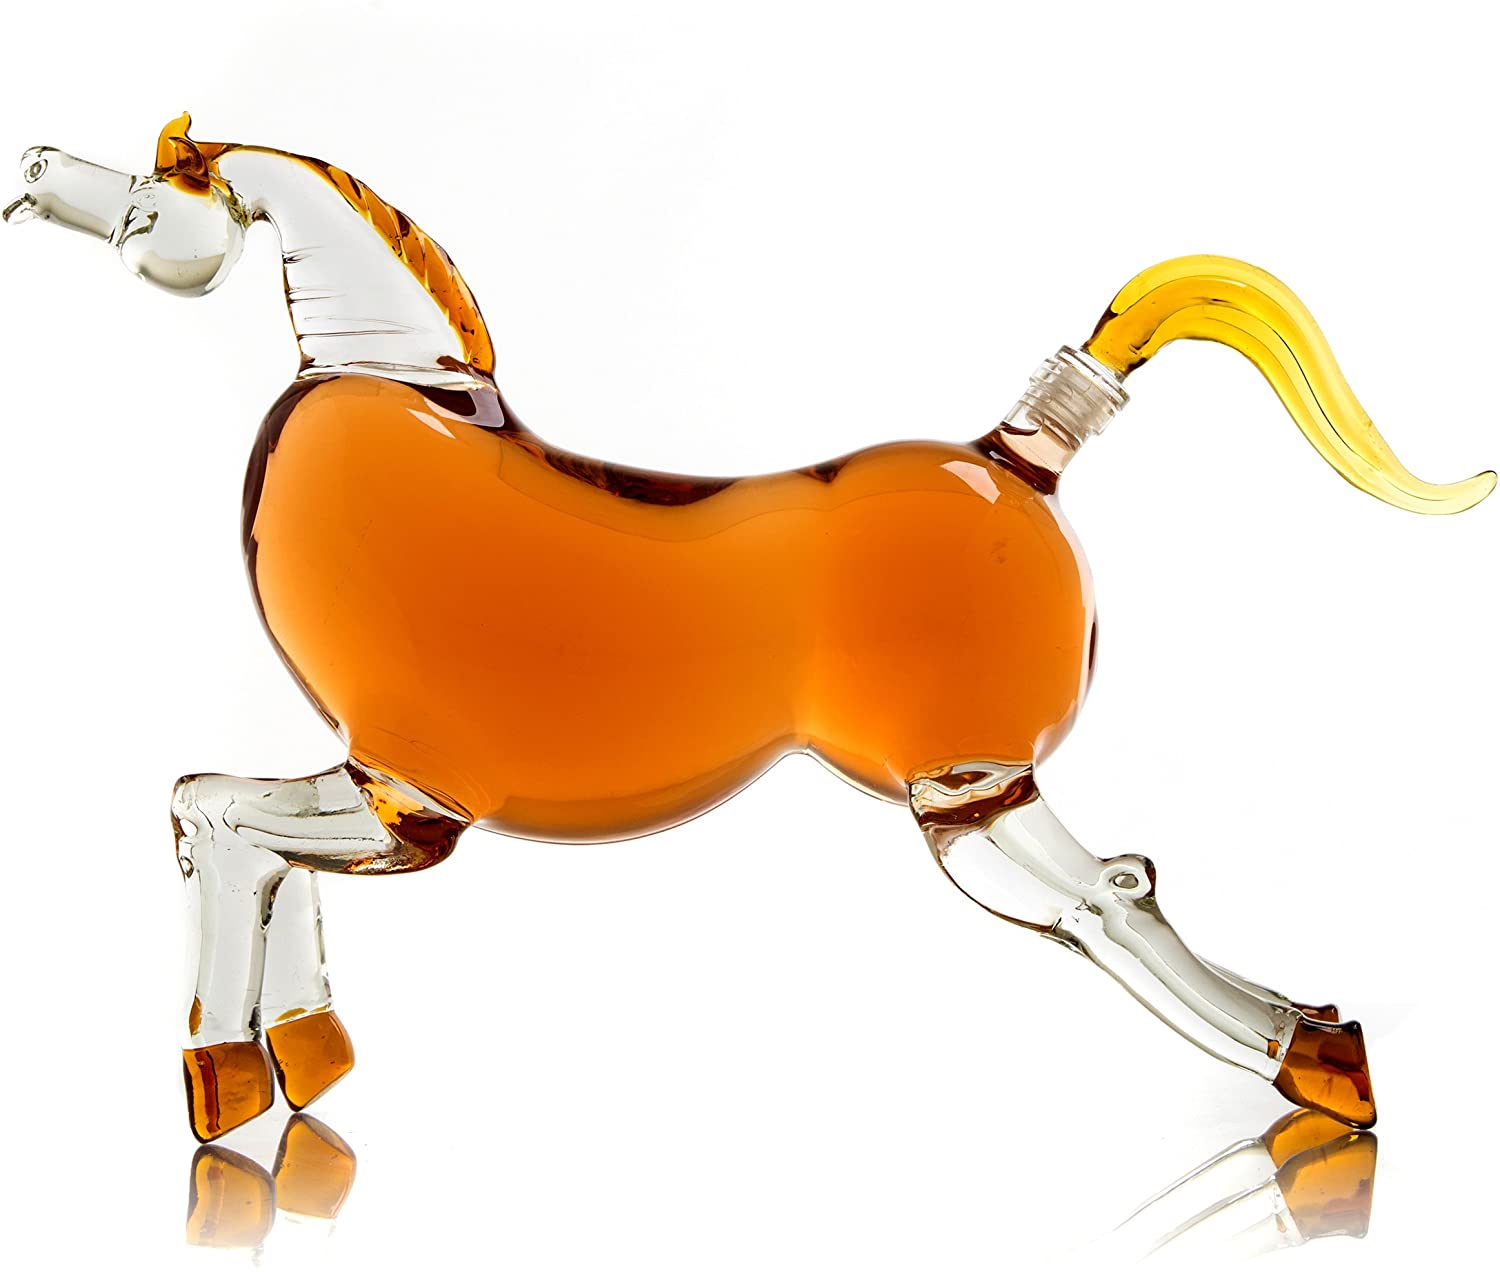 A horse shaped liquor decanter